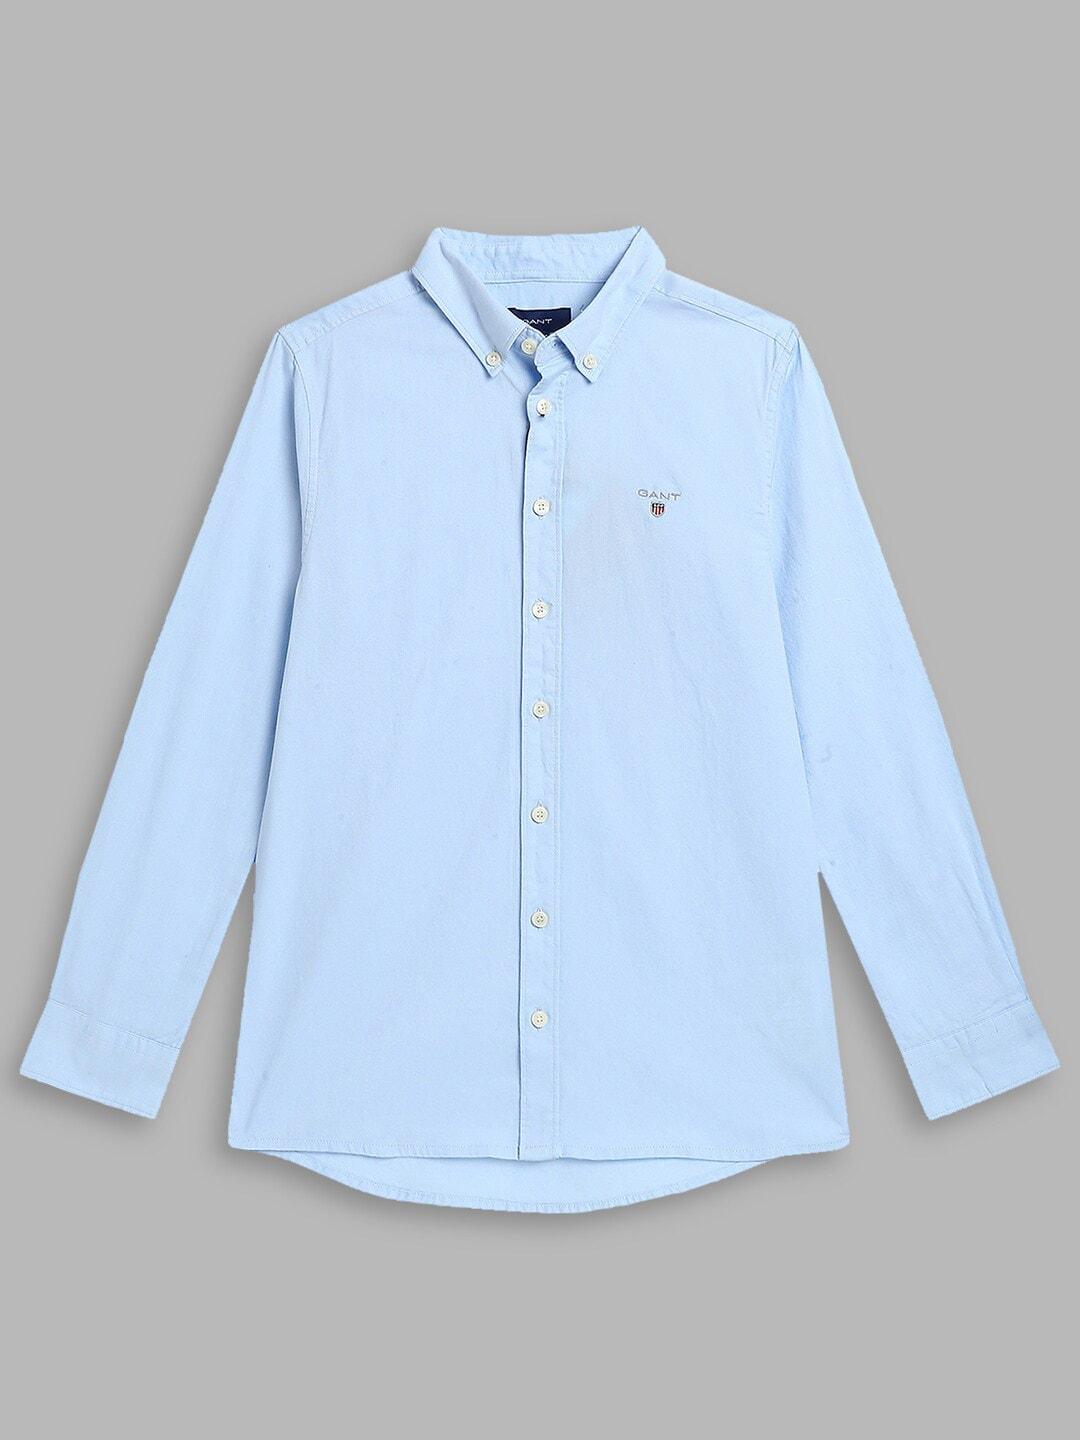 gant-boys-blue-classic-casual-shirt